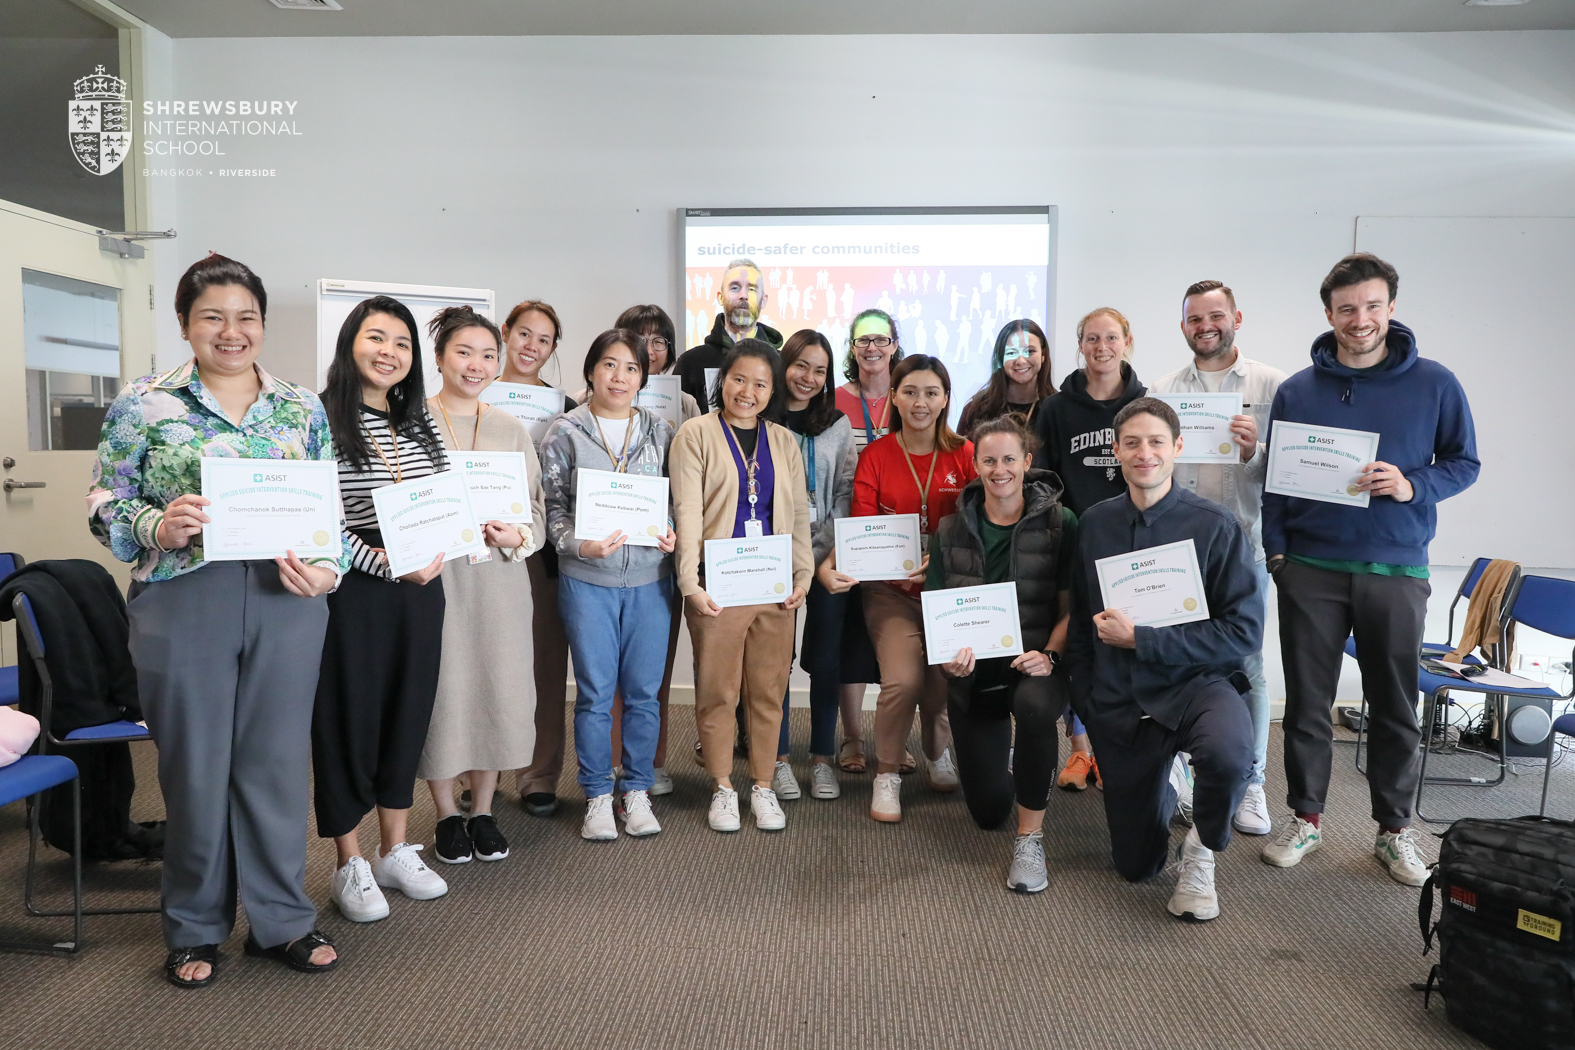 Shrewsbury International School Bangkok Offers ASIST Workshops to Prevent Suicides